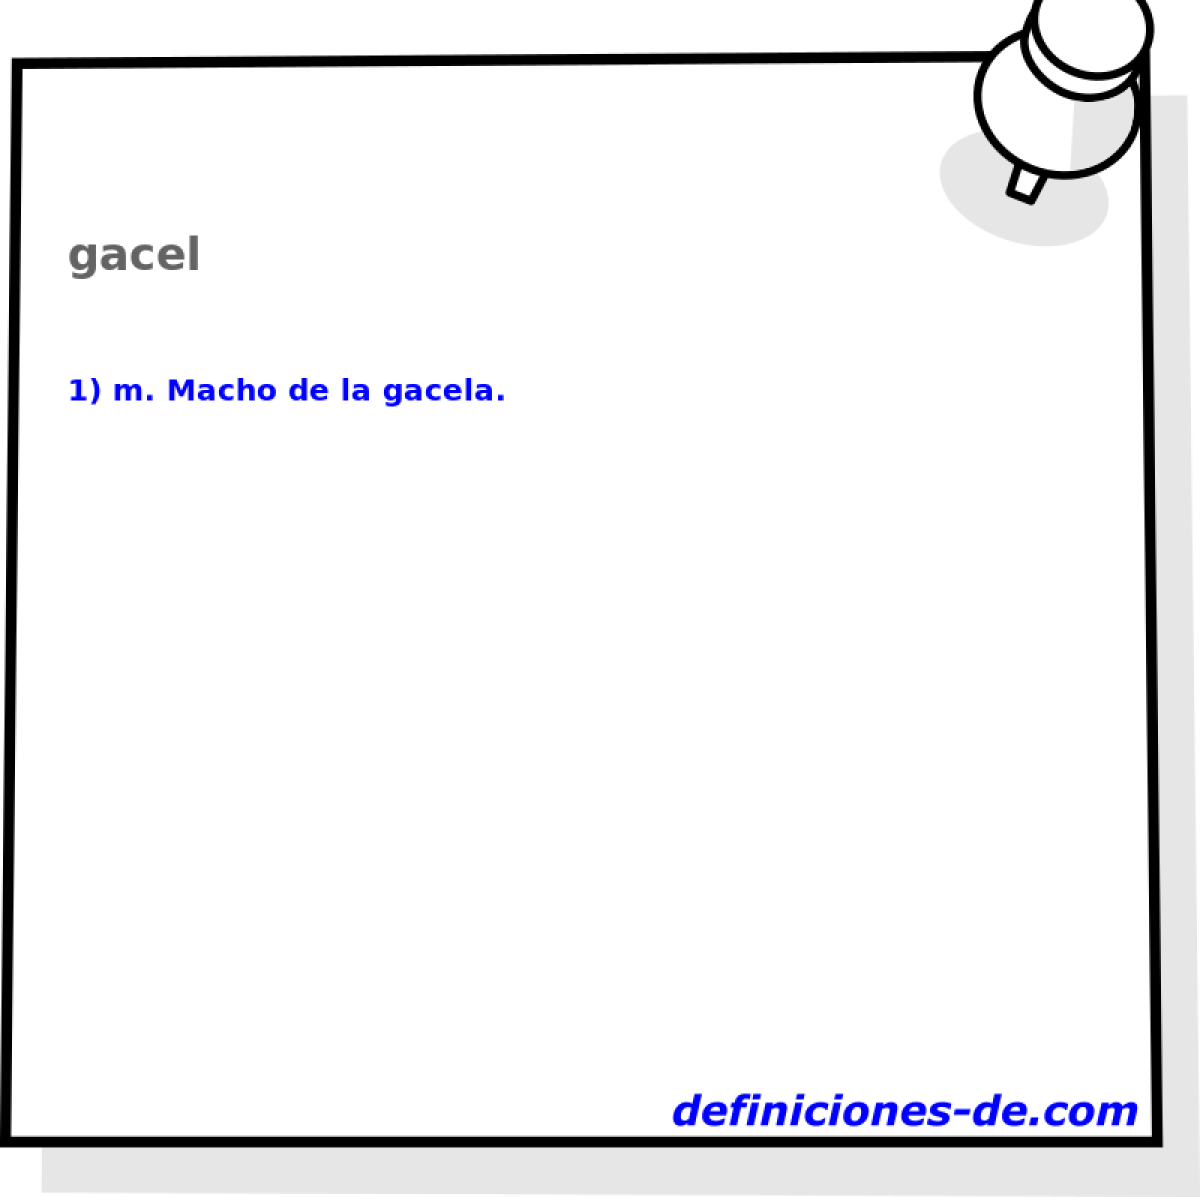 gacel 